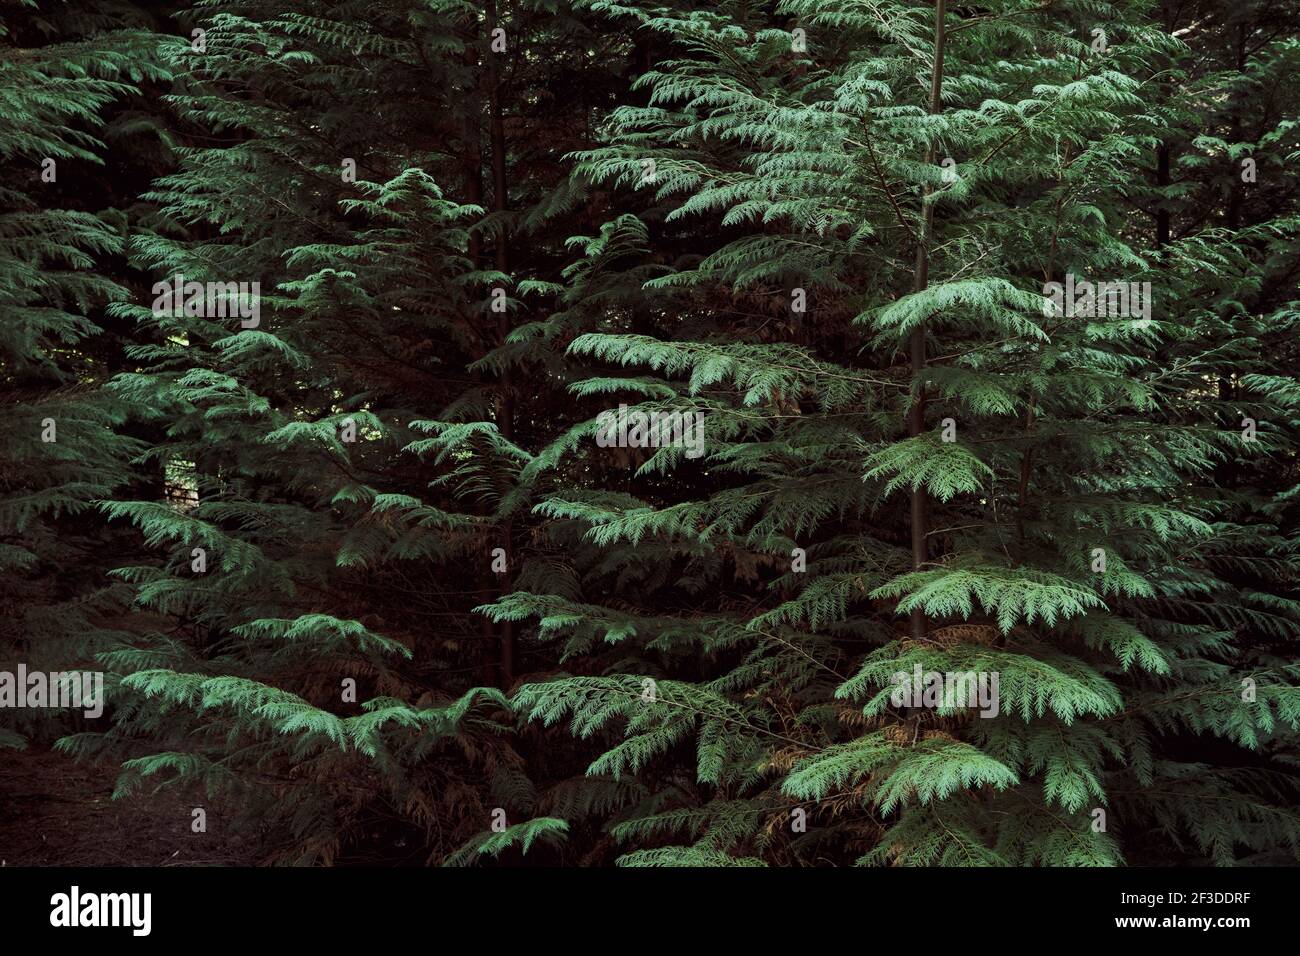 Evergreen thuja trees with  dark green foliage Stock Photo